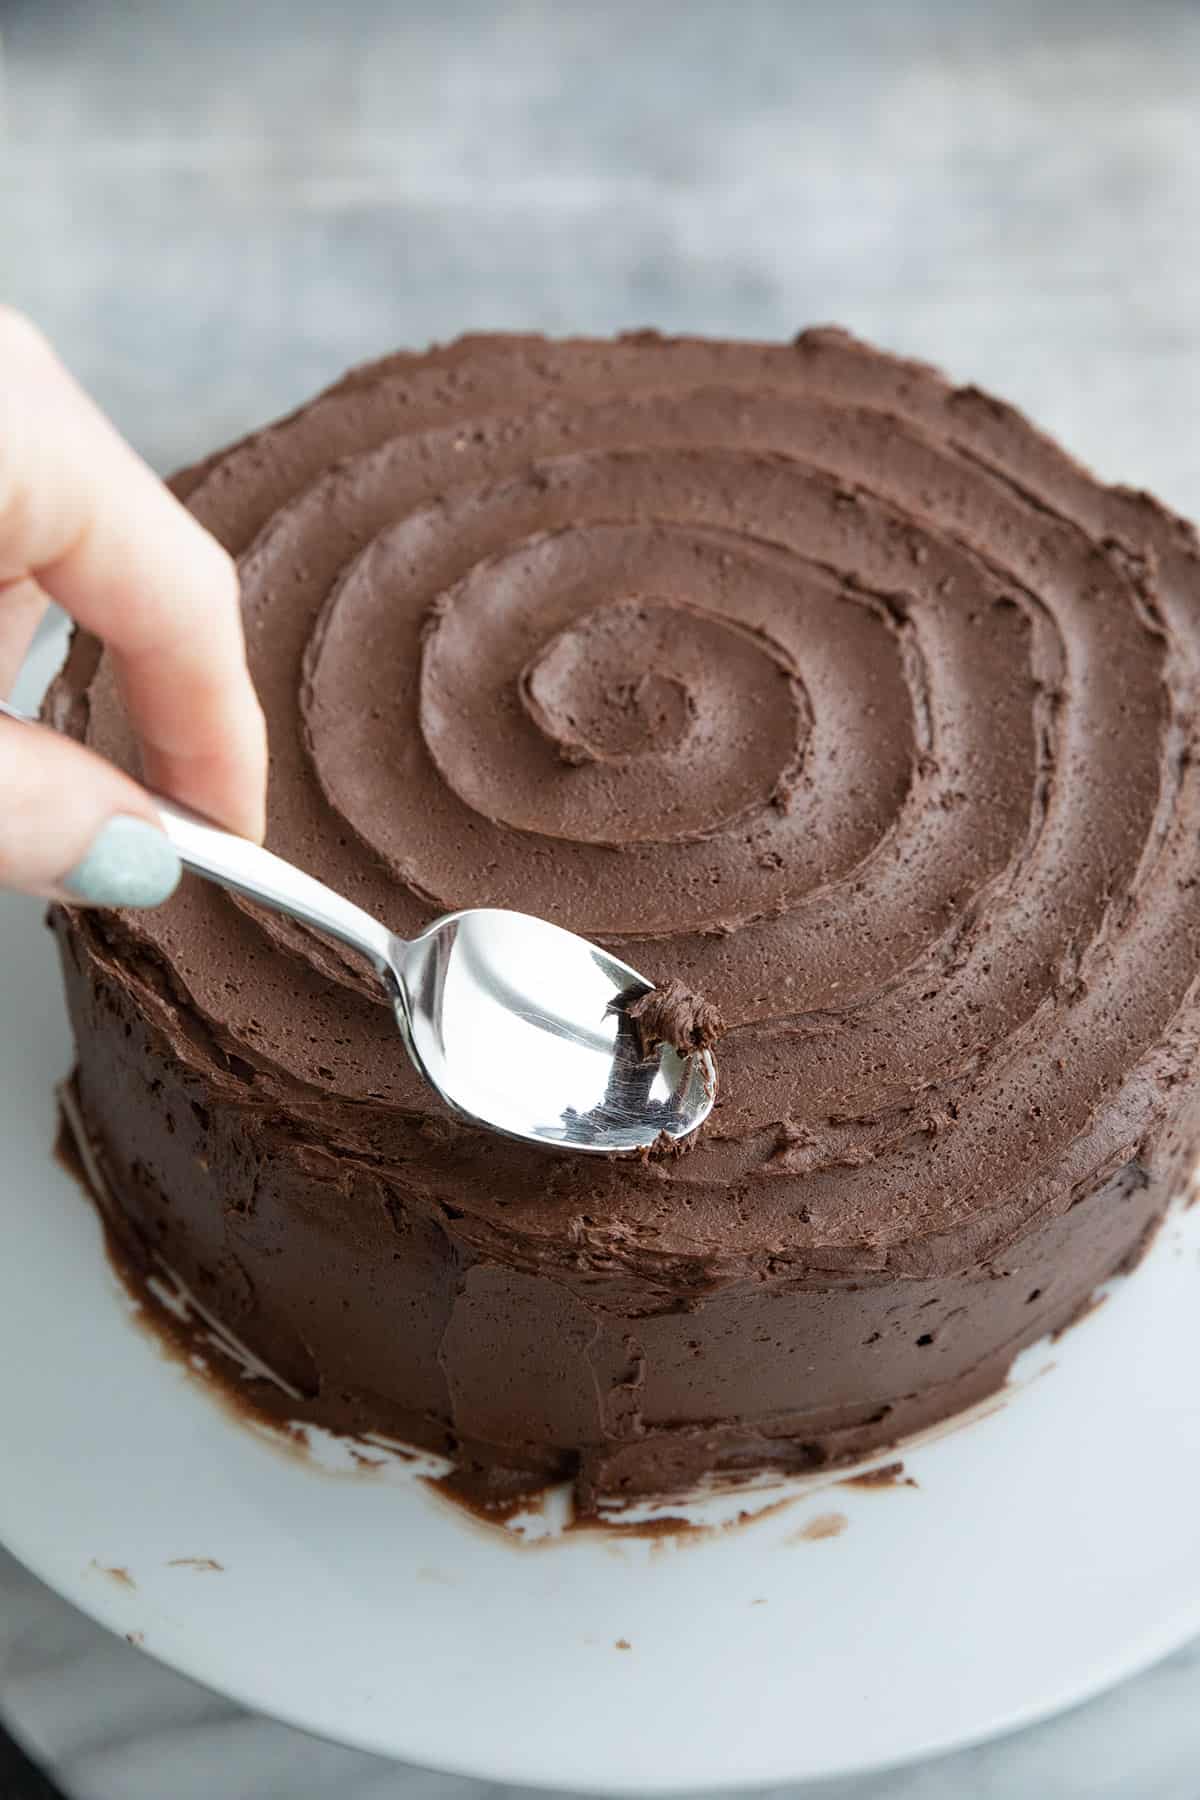 A spoon creating a swirl design on a keto chocolate cake.